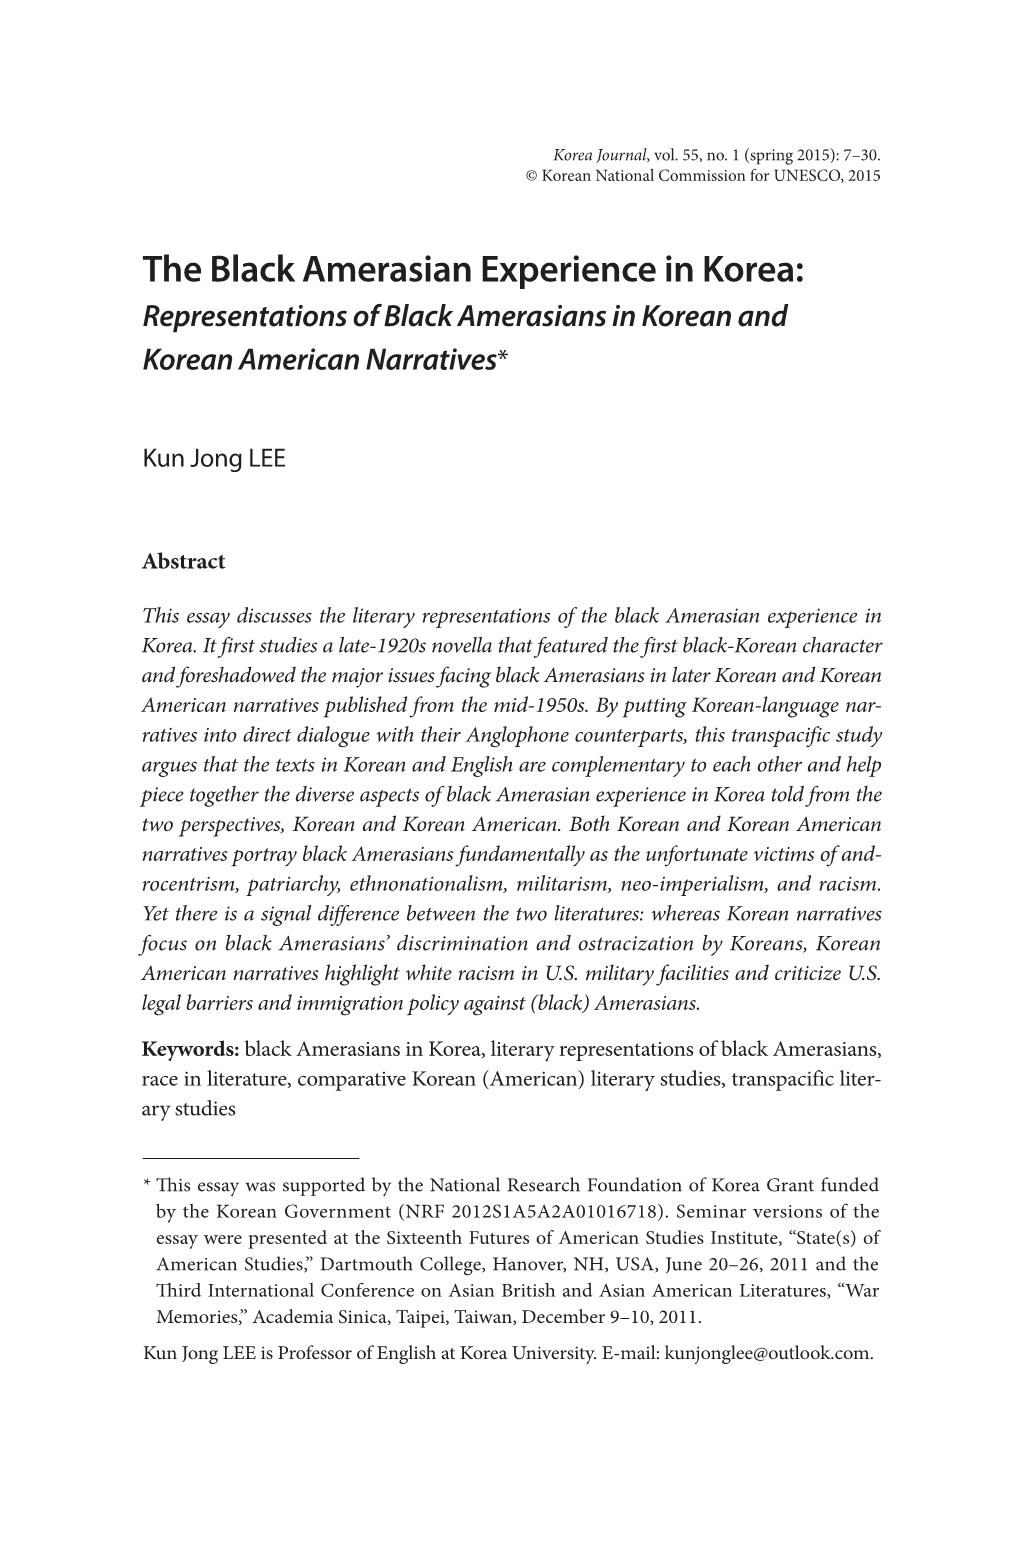 The Black Amerasian Experience in Korea: Representations of Black Amerasians in Korean and Korean American Narratives*